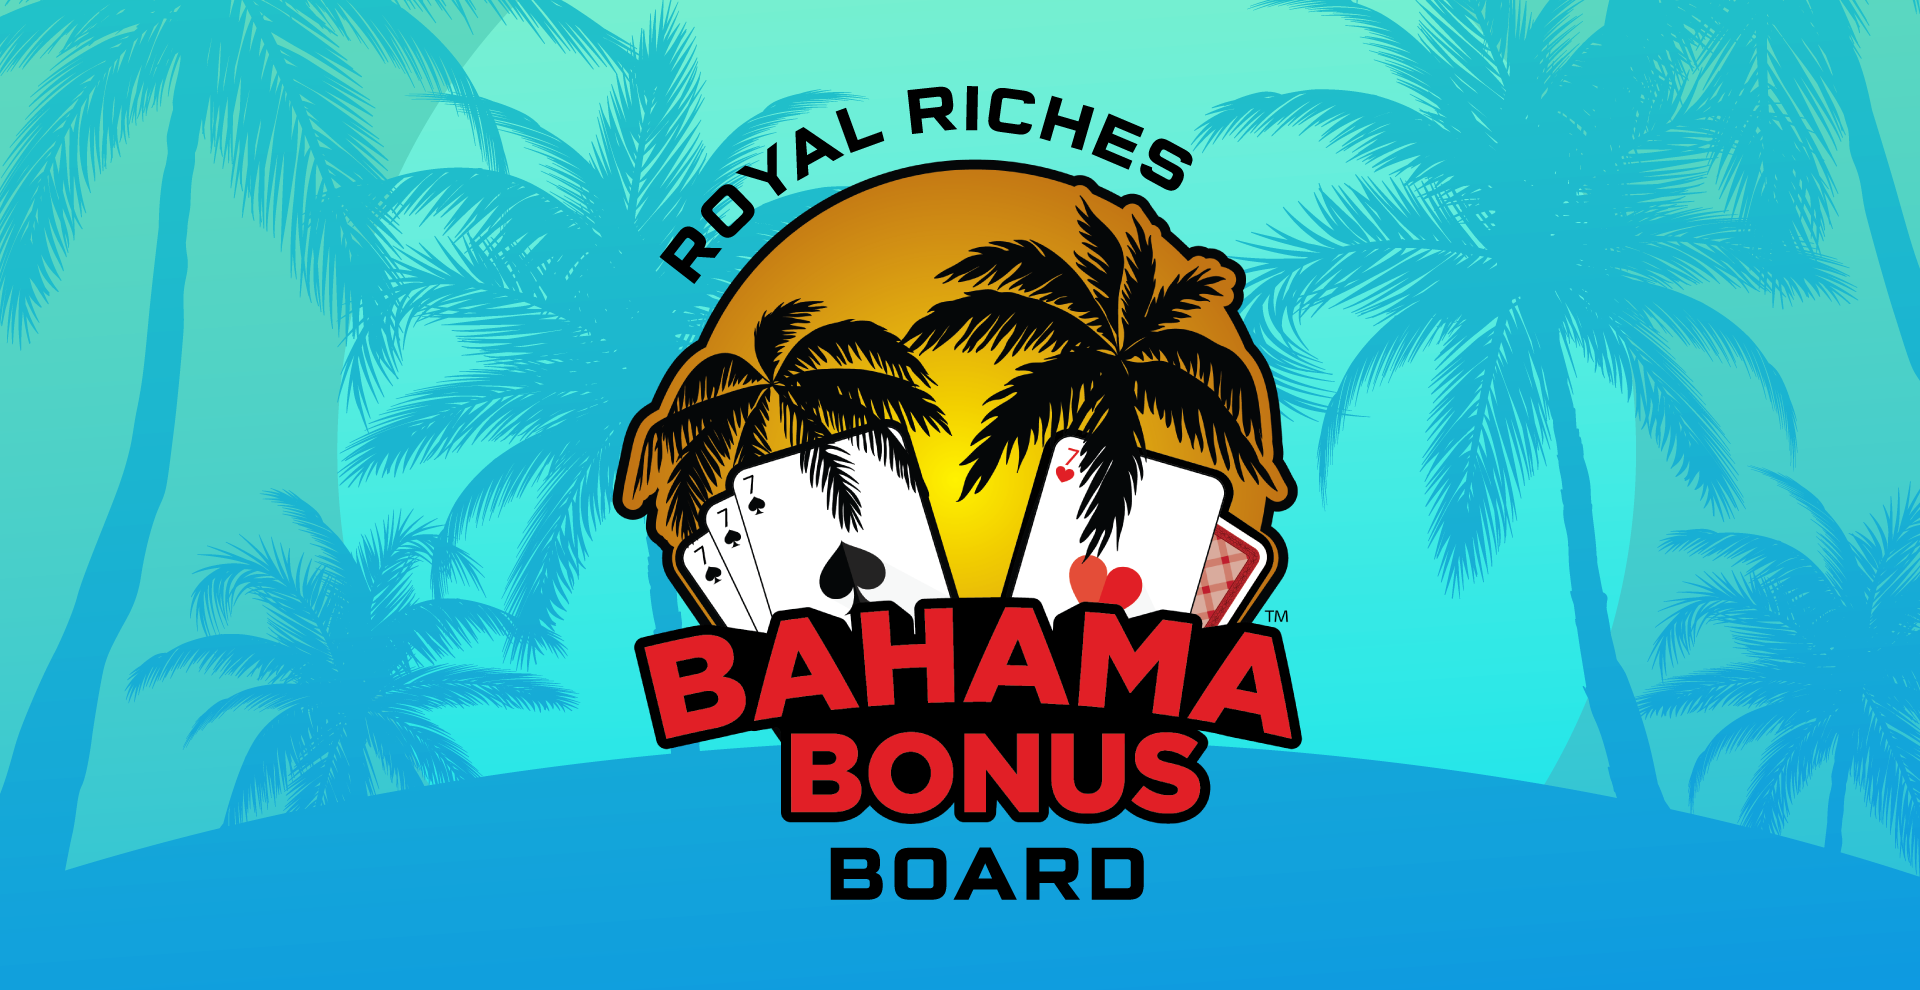 Crazy Moose Casino Mountlake Terrace | Royal Riches Bahama Bonus Board